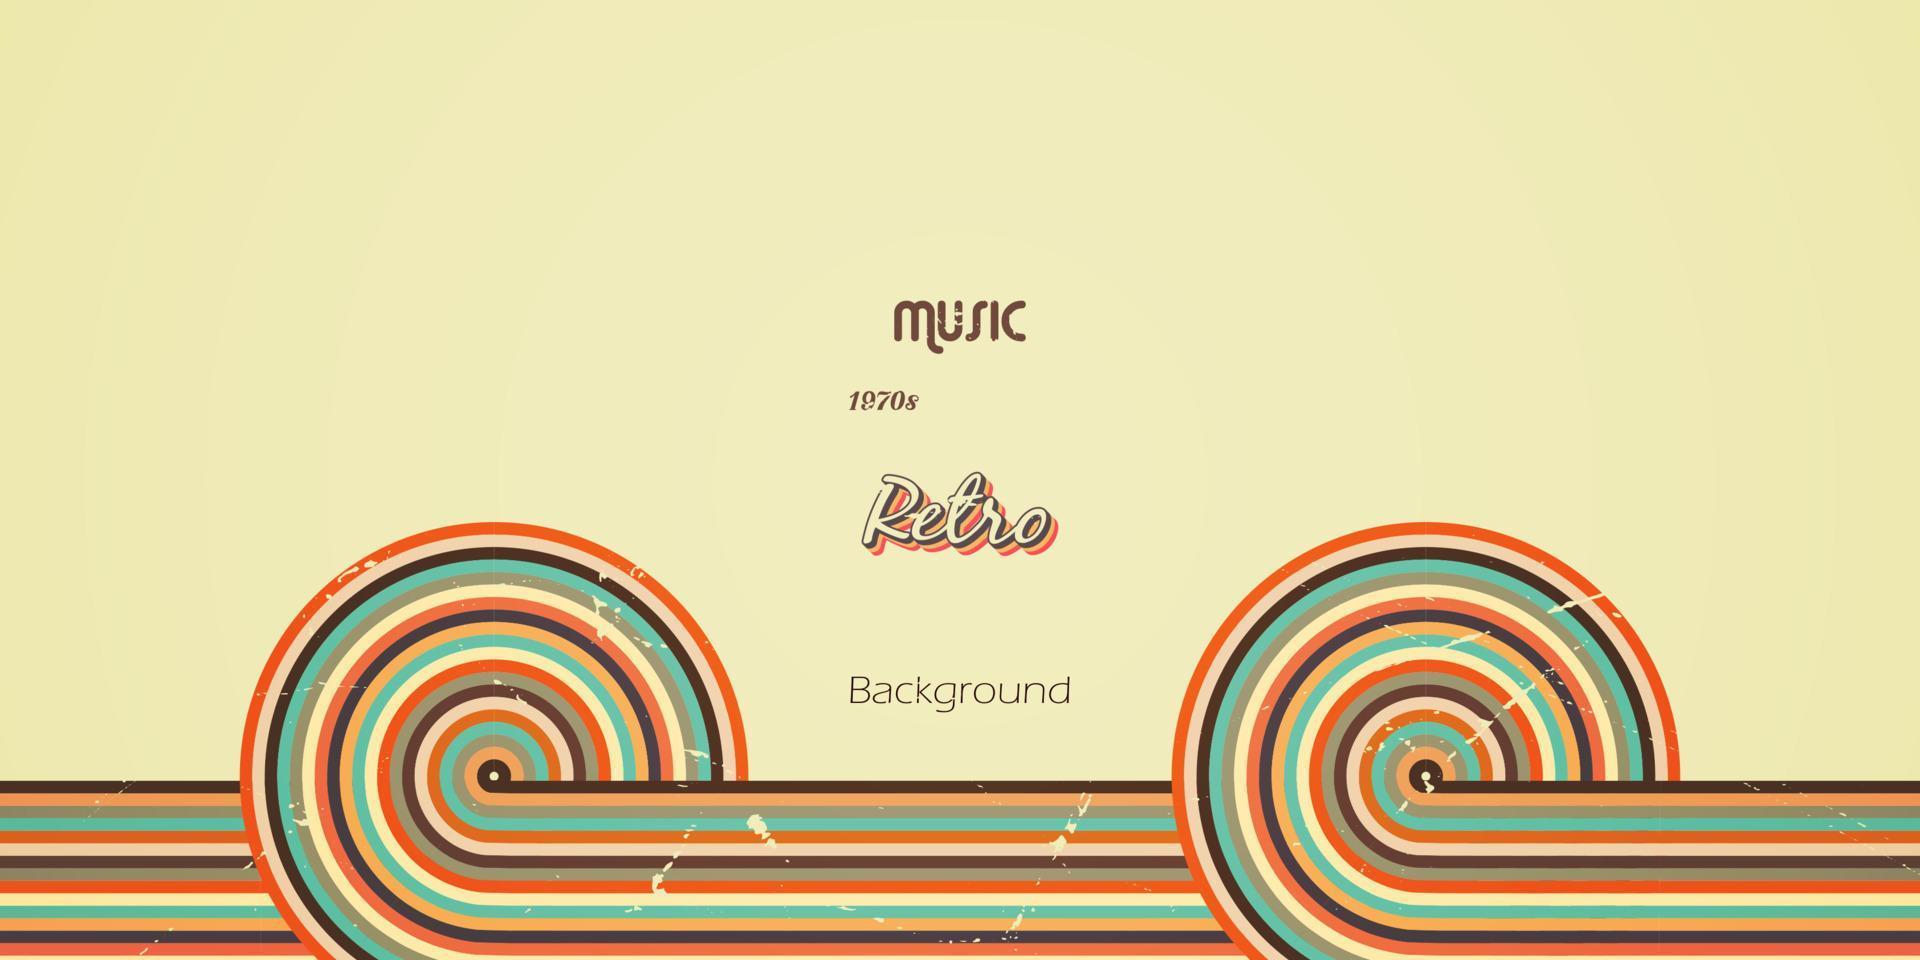 Retro style background music poster design vector